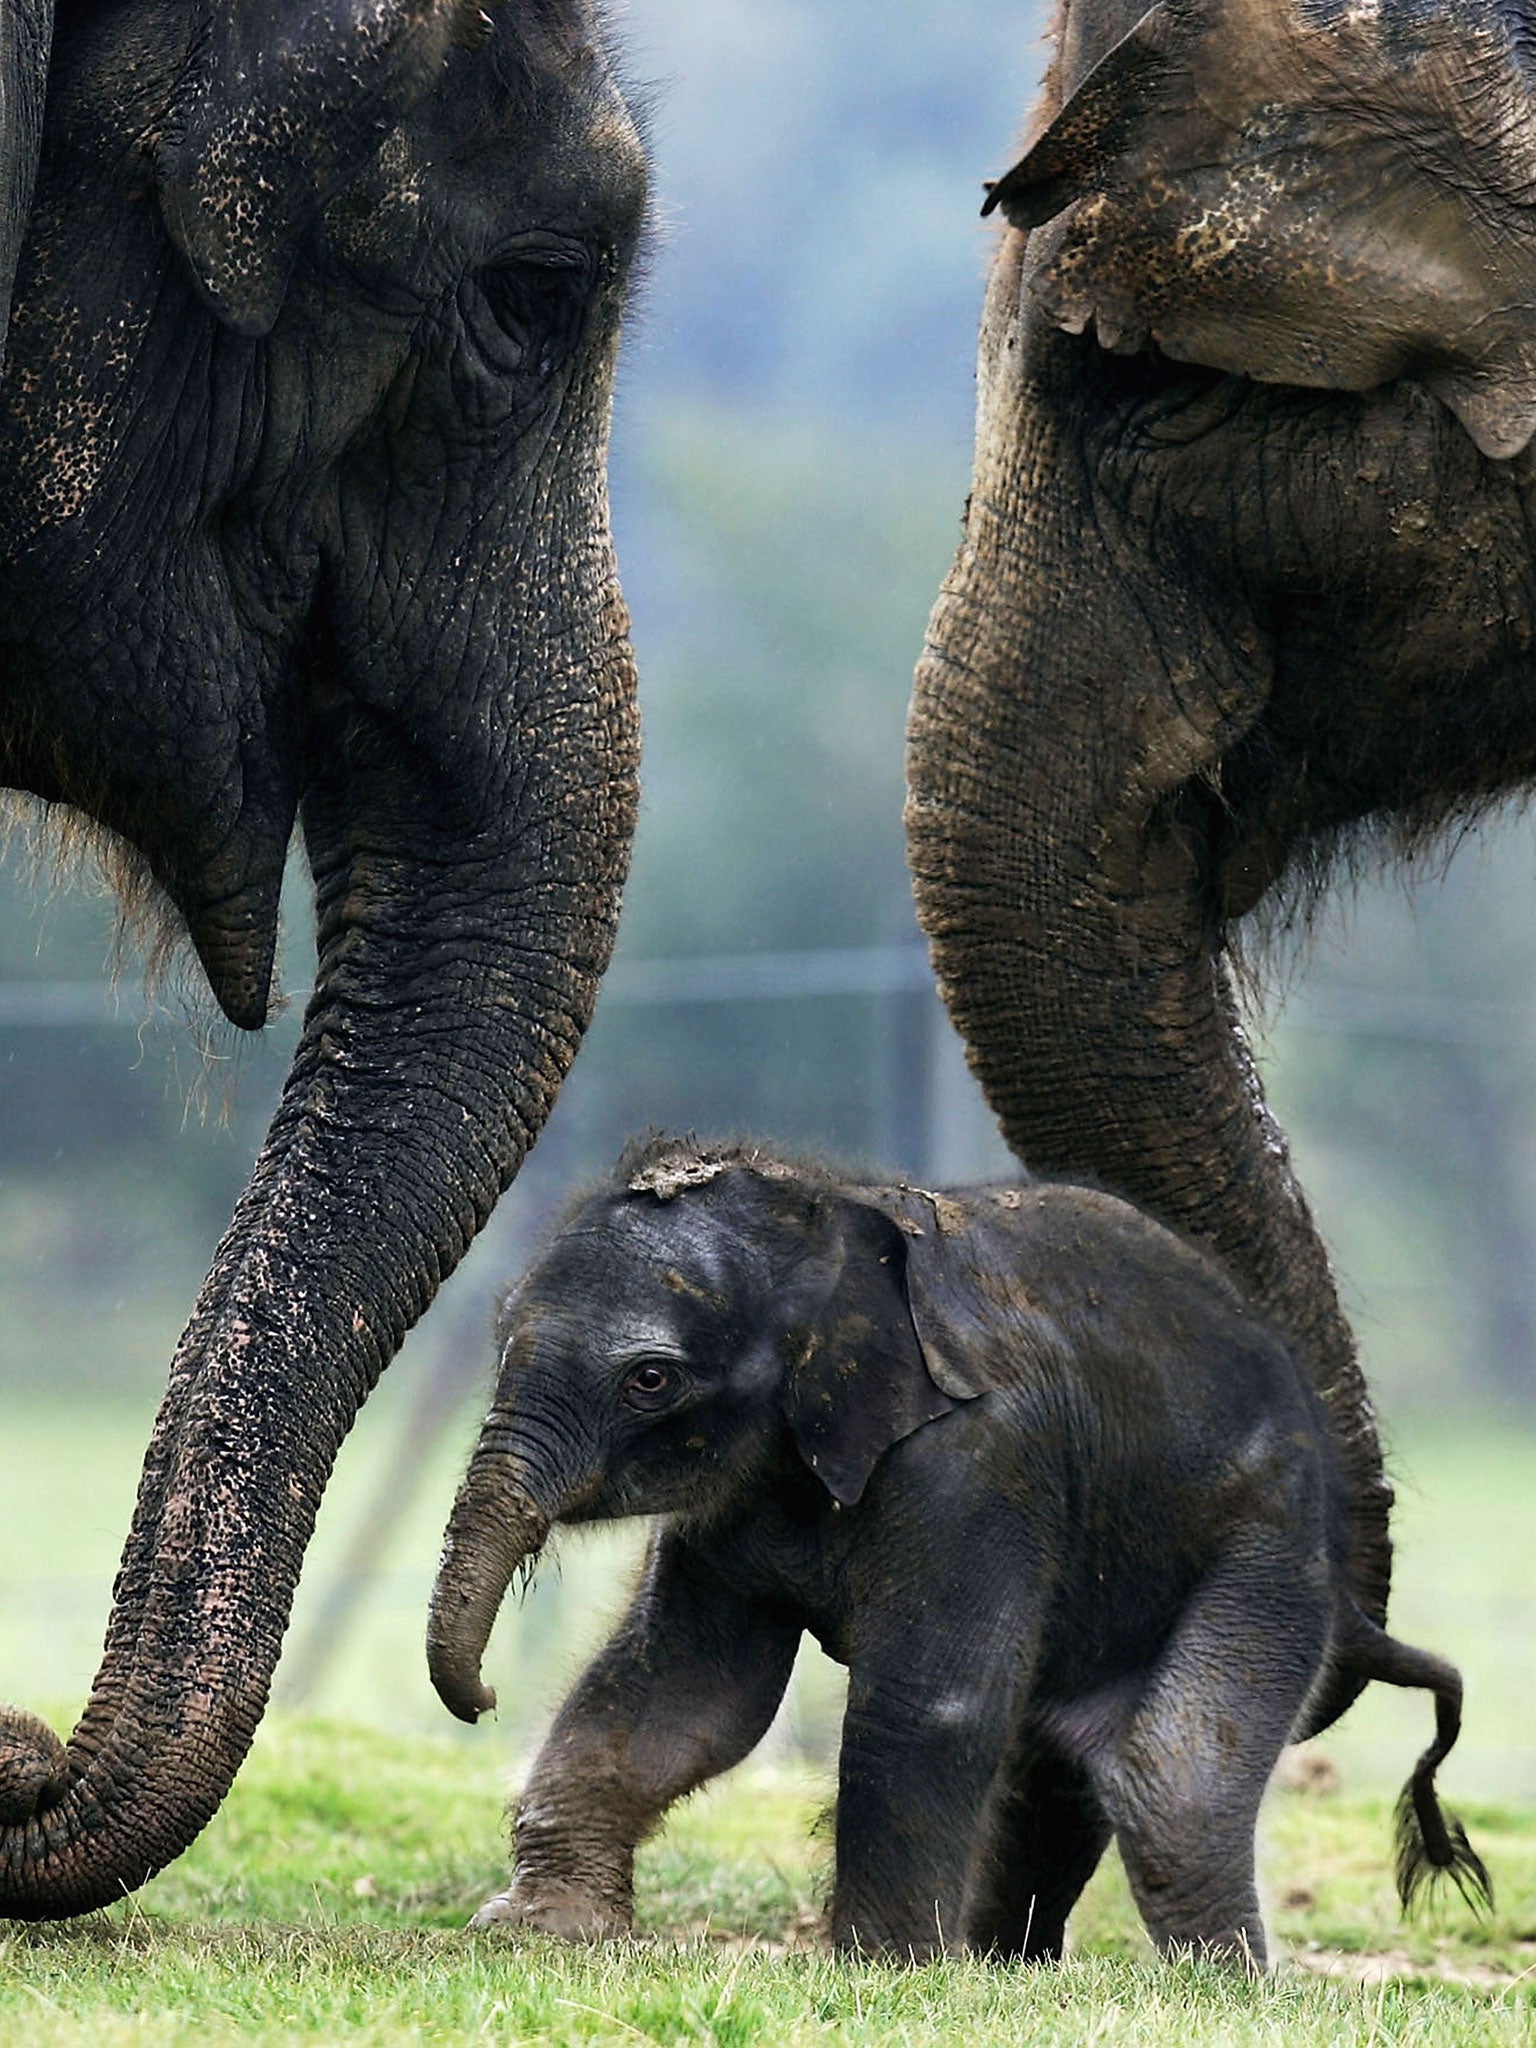 A baby Asian elephant 